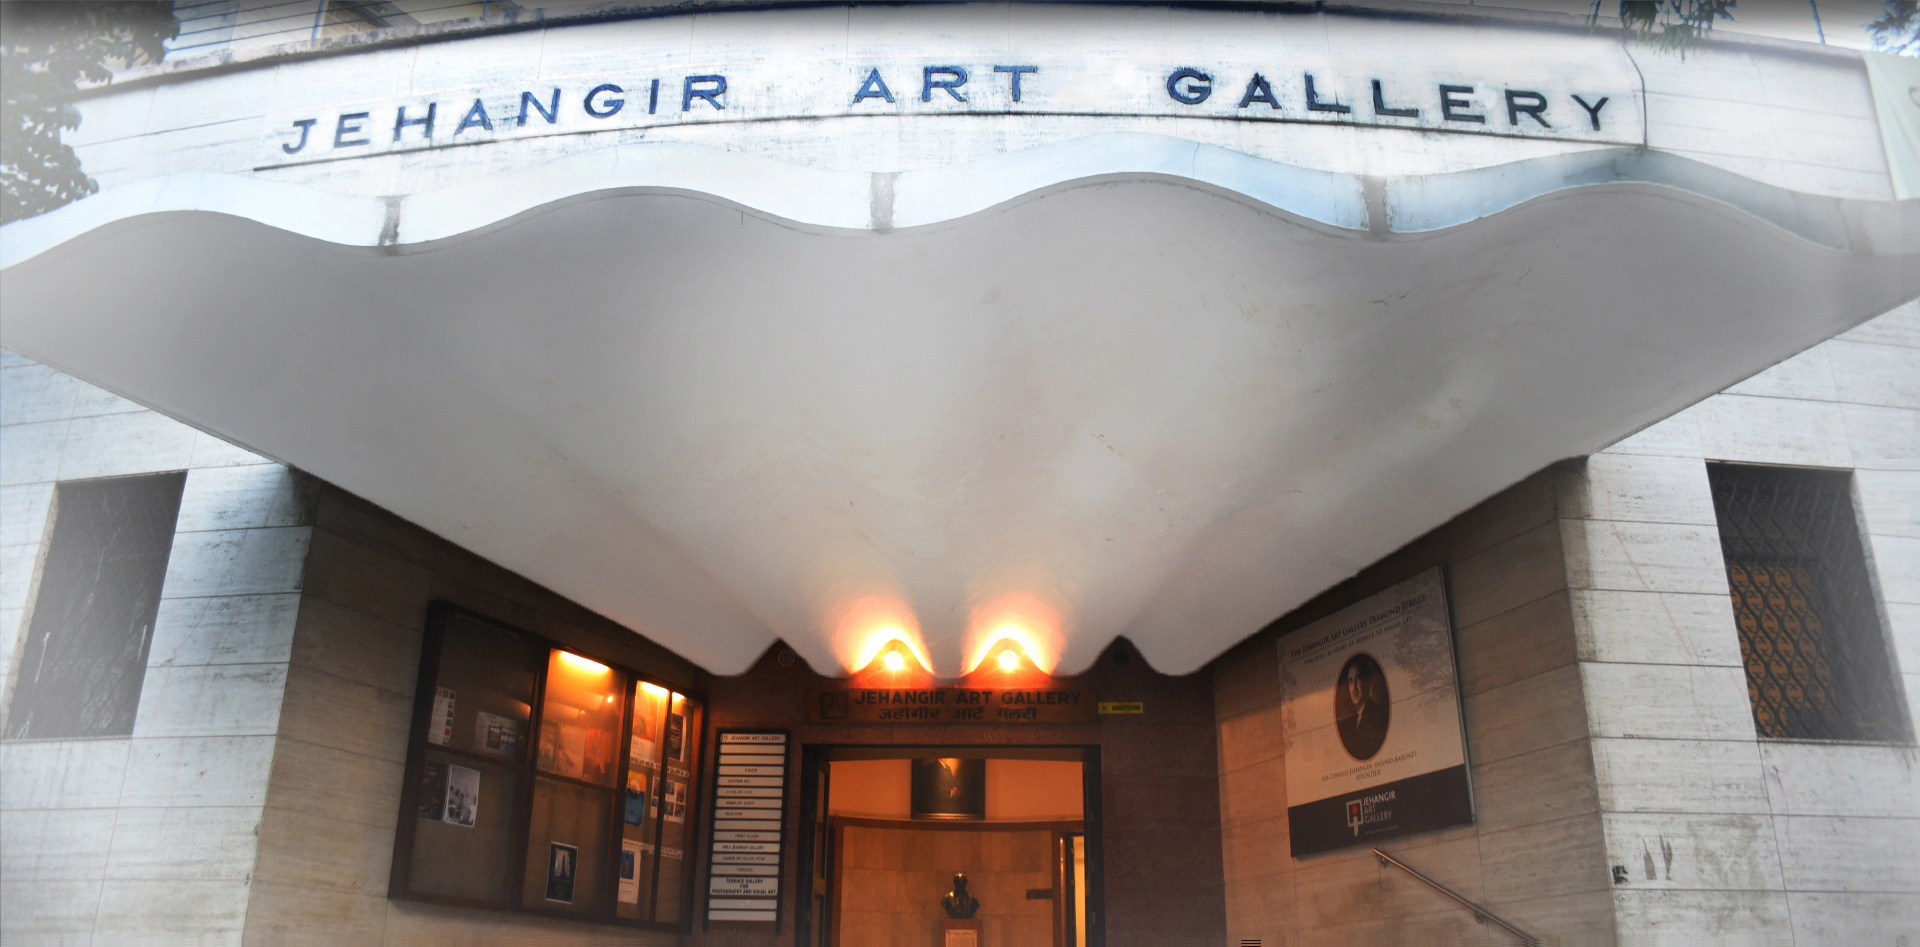 Jahangir Art Gallery